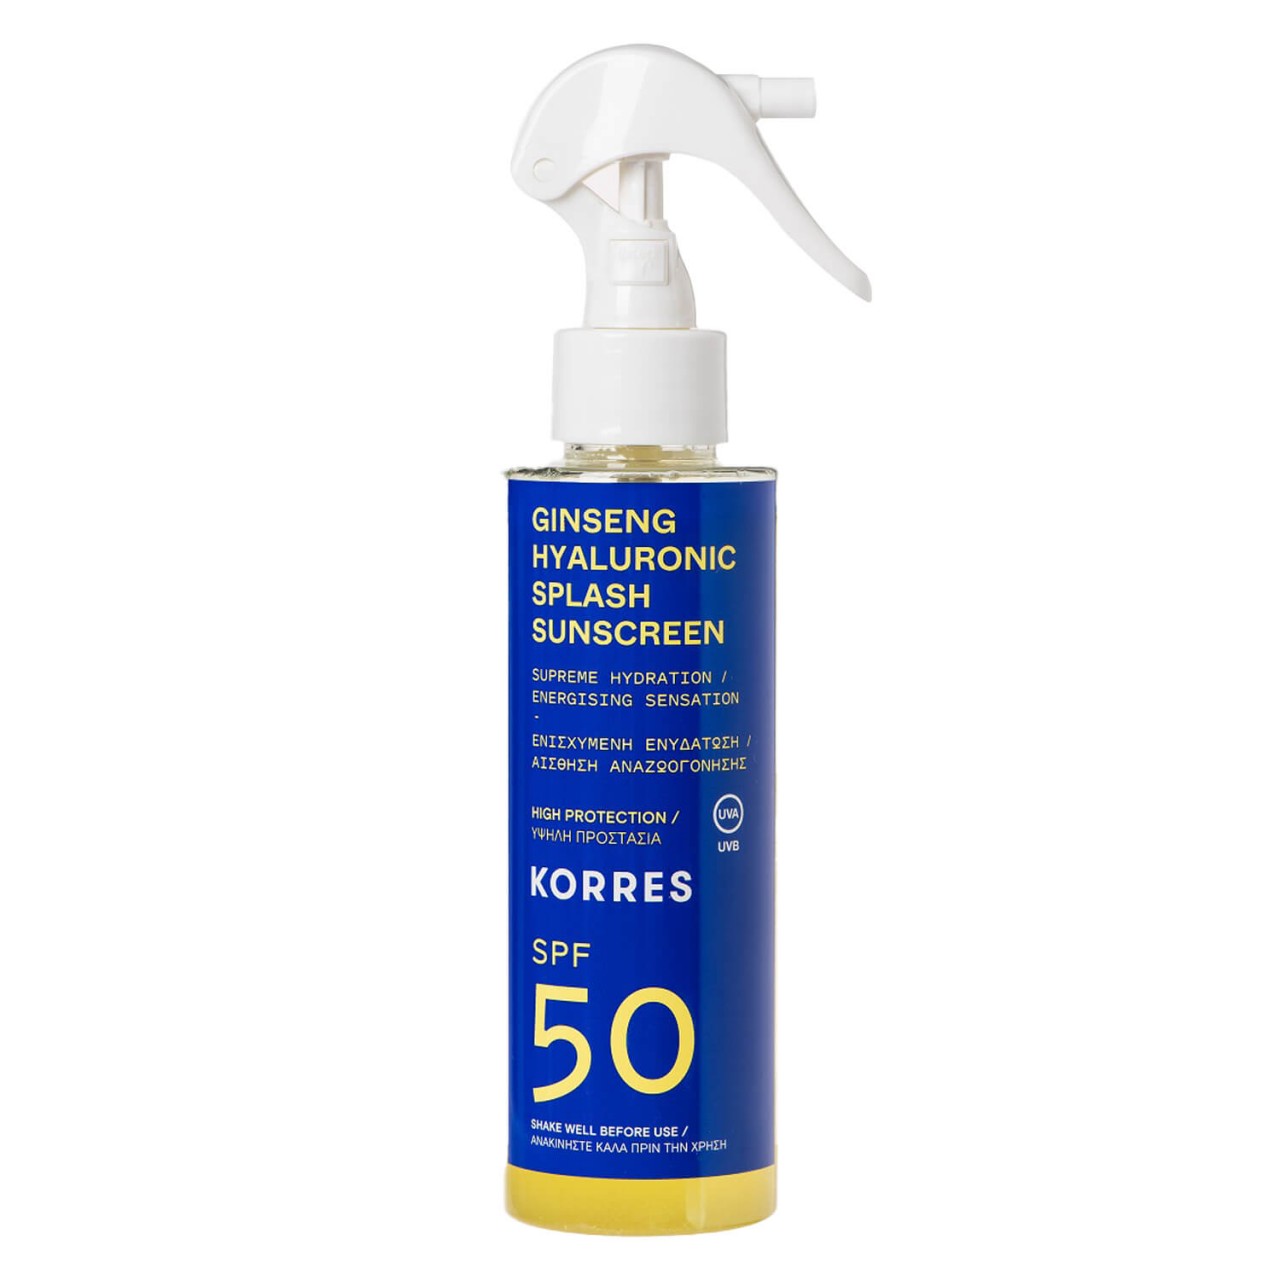 Korres Care - Ginseng Hyaluronic Splash Sunscreen SPF50 von Korres